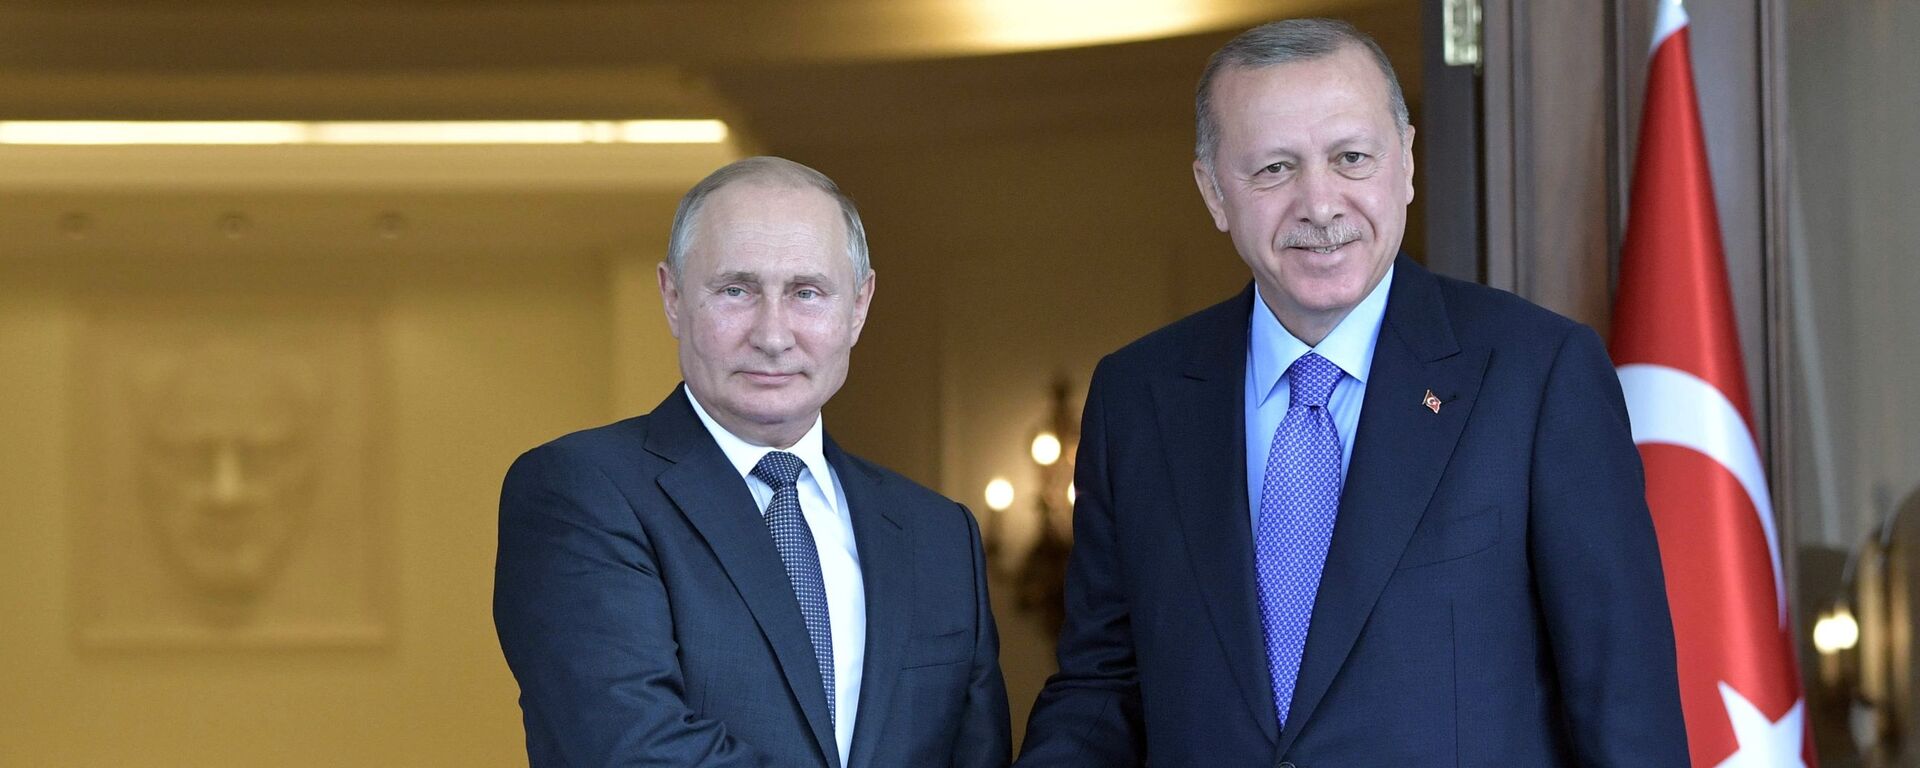 Президент РФ Владимир Путин и президент Турции Реджеп Тайип Эрдоган во время встречи, фото из архива - Sputnik Азербайджан, 1920, 03.12.2021